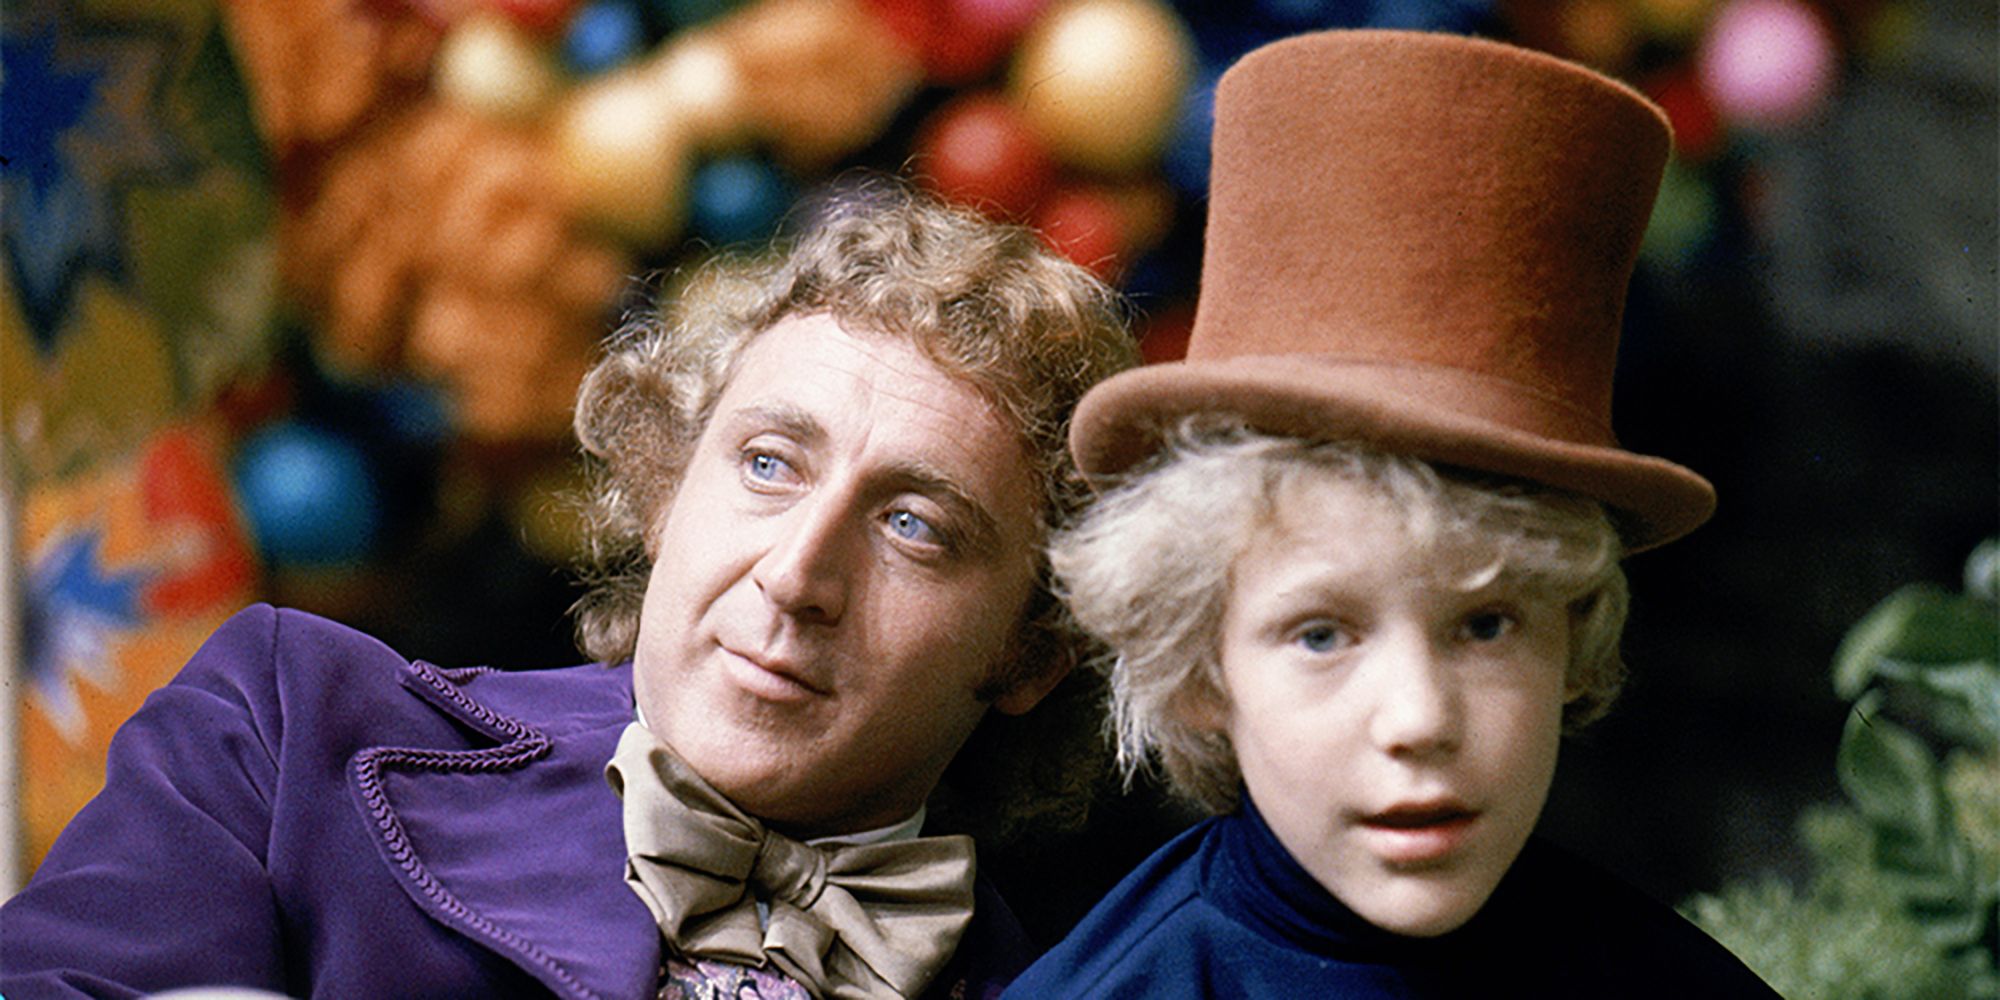 Willy Wonka et Charlie à la chocolaterie dans Willy Wonka et la chocolaterie.